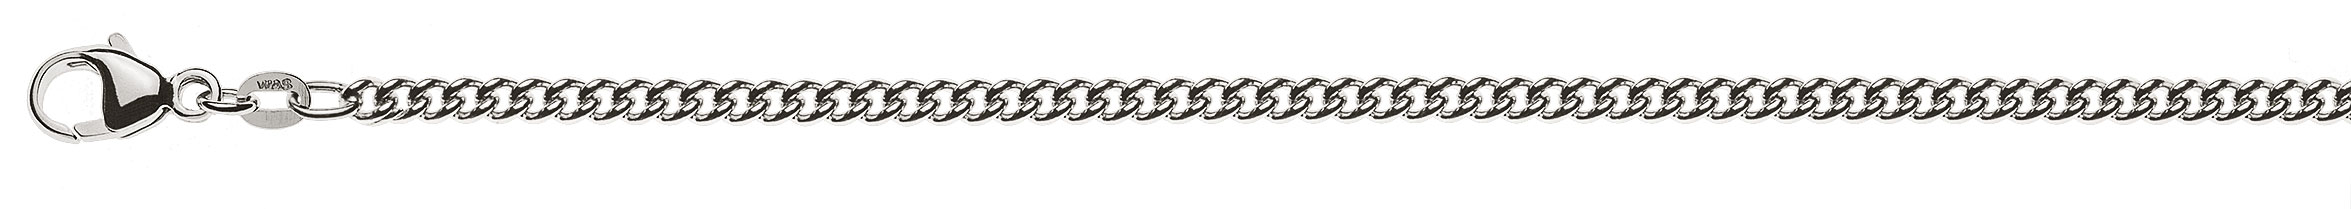 AURONOS Prestige Necklace white gold 18K round curb chain 45cm 2.8mm